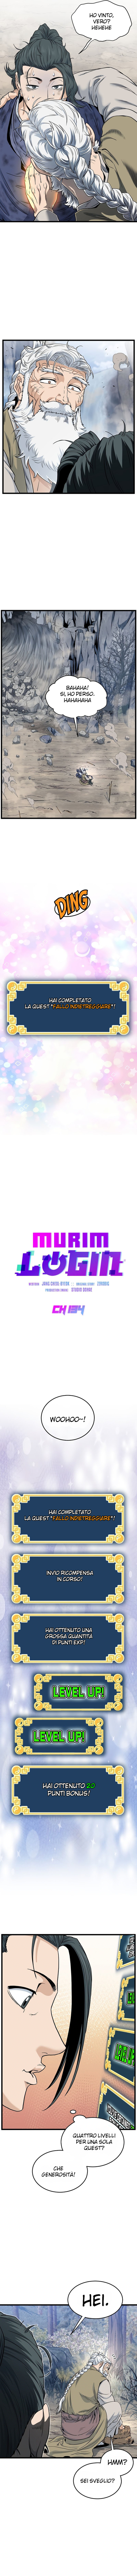 Murim Login - ch 134 Zeurel